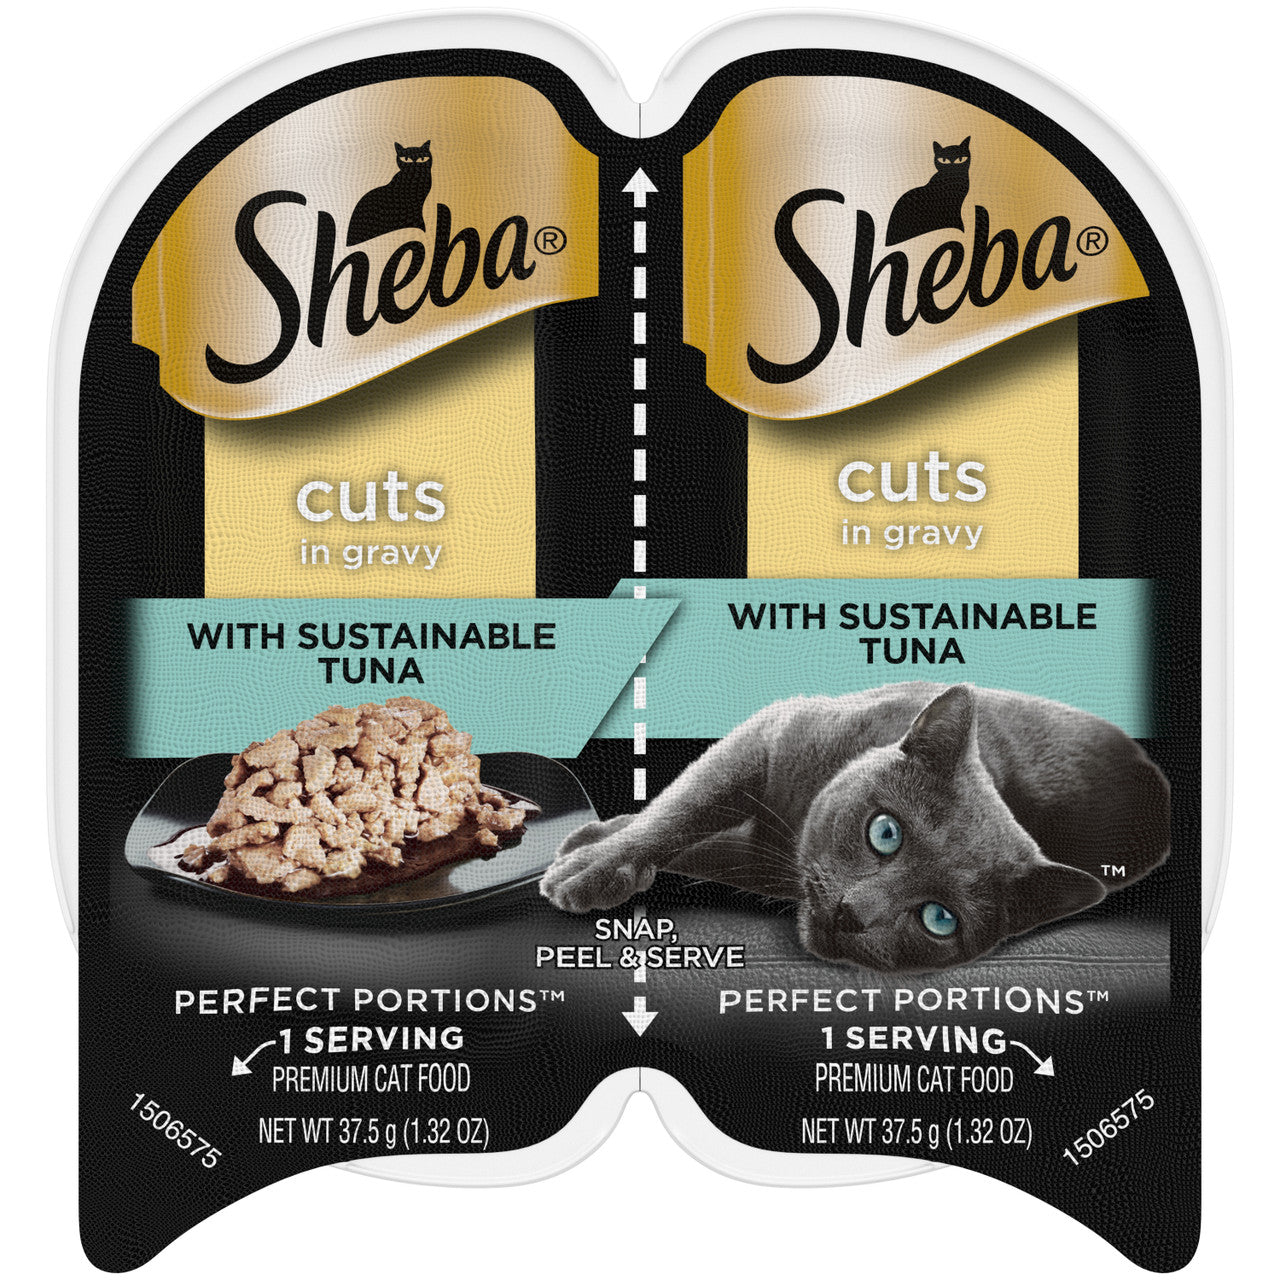 Sheba Perfect Portions Cuts in Gravy Wet Cat Food Signature Tuna 2.6oz 24pk